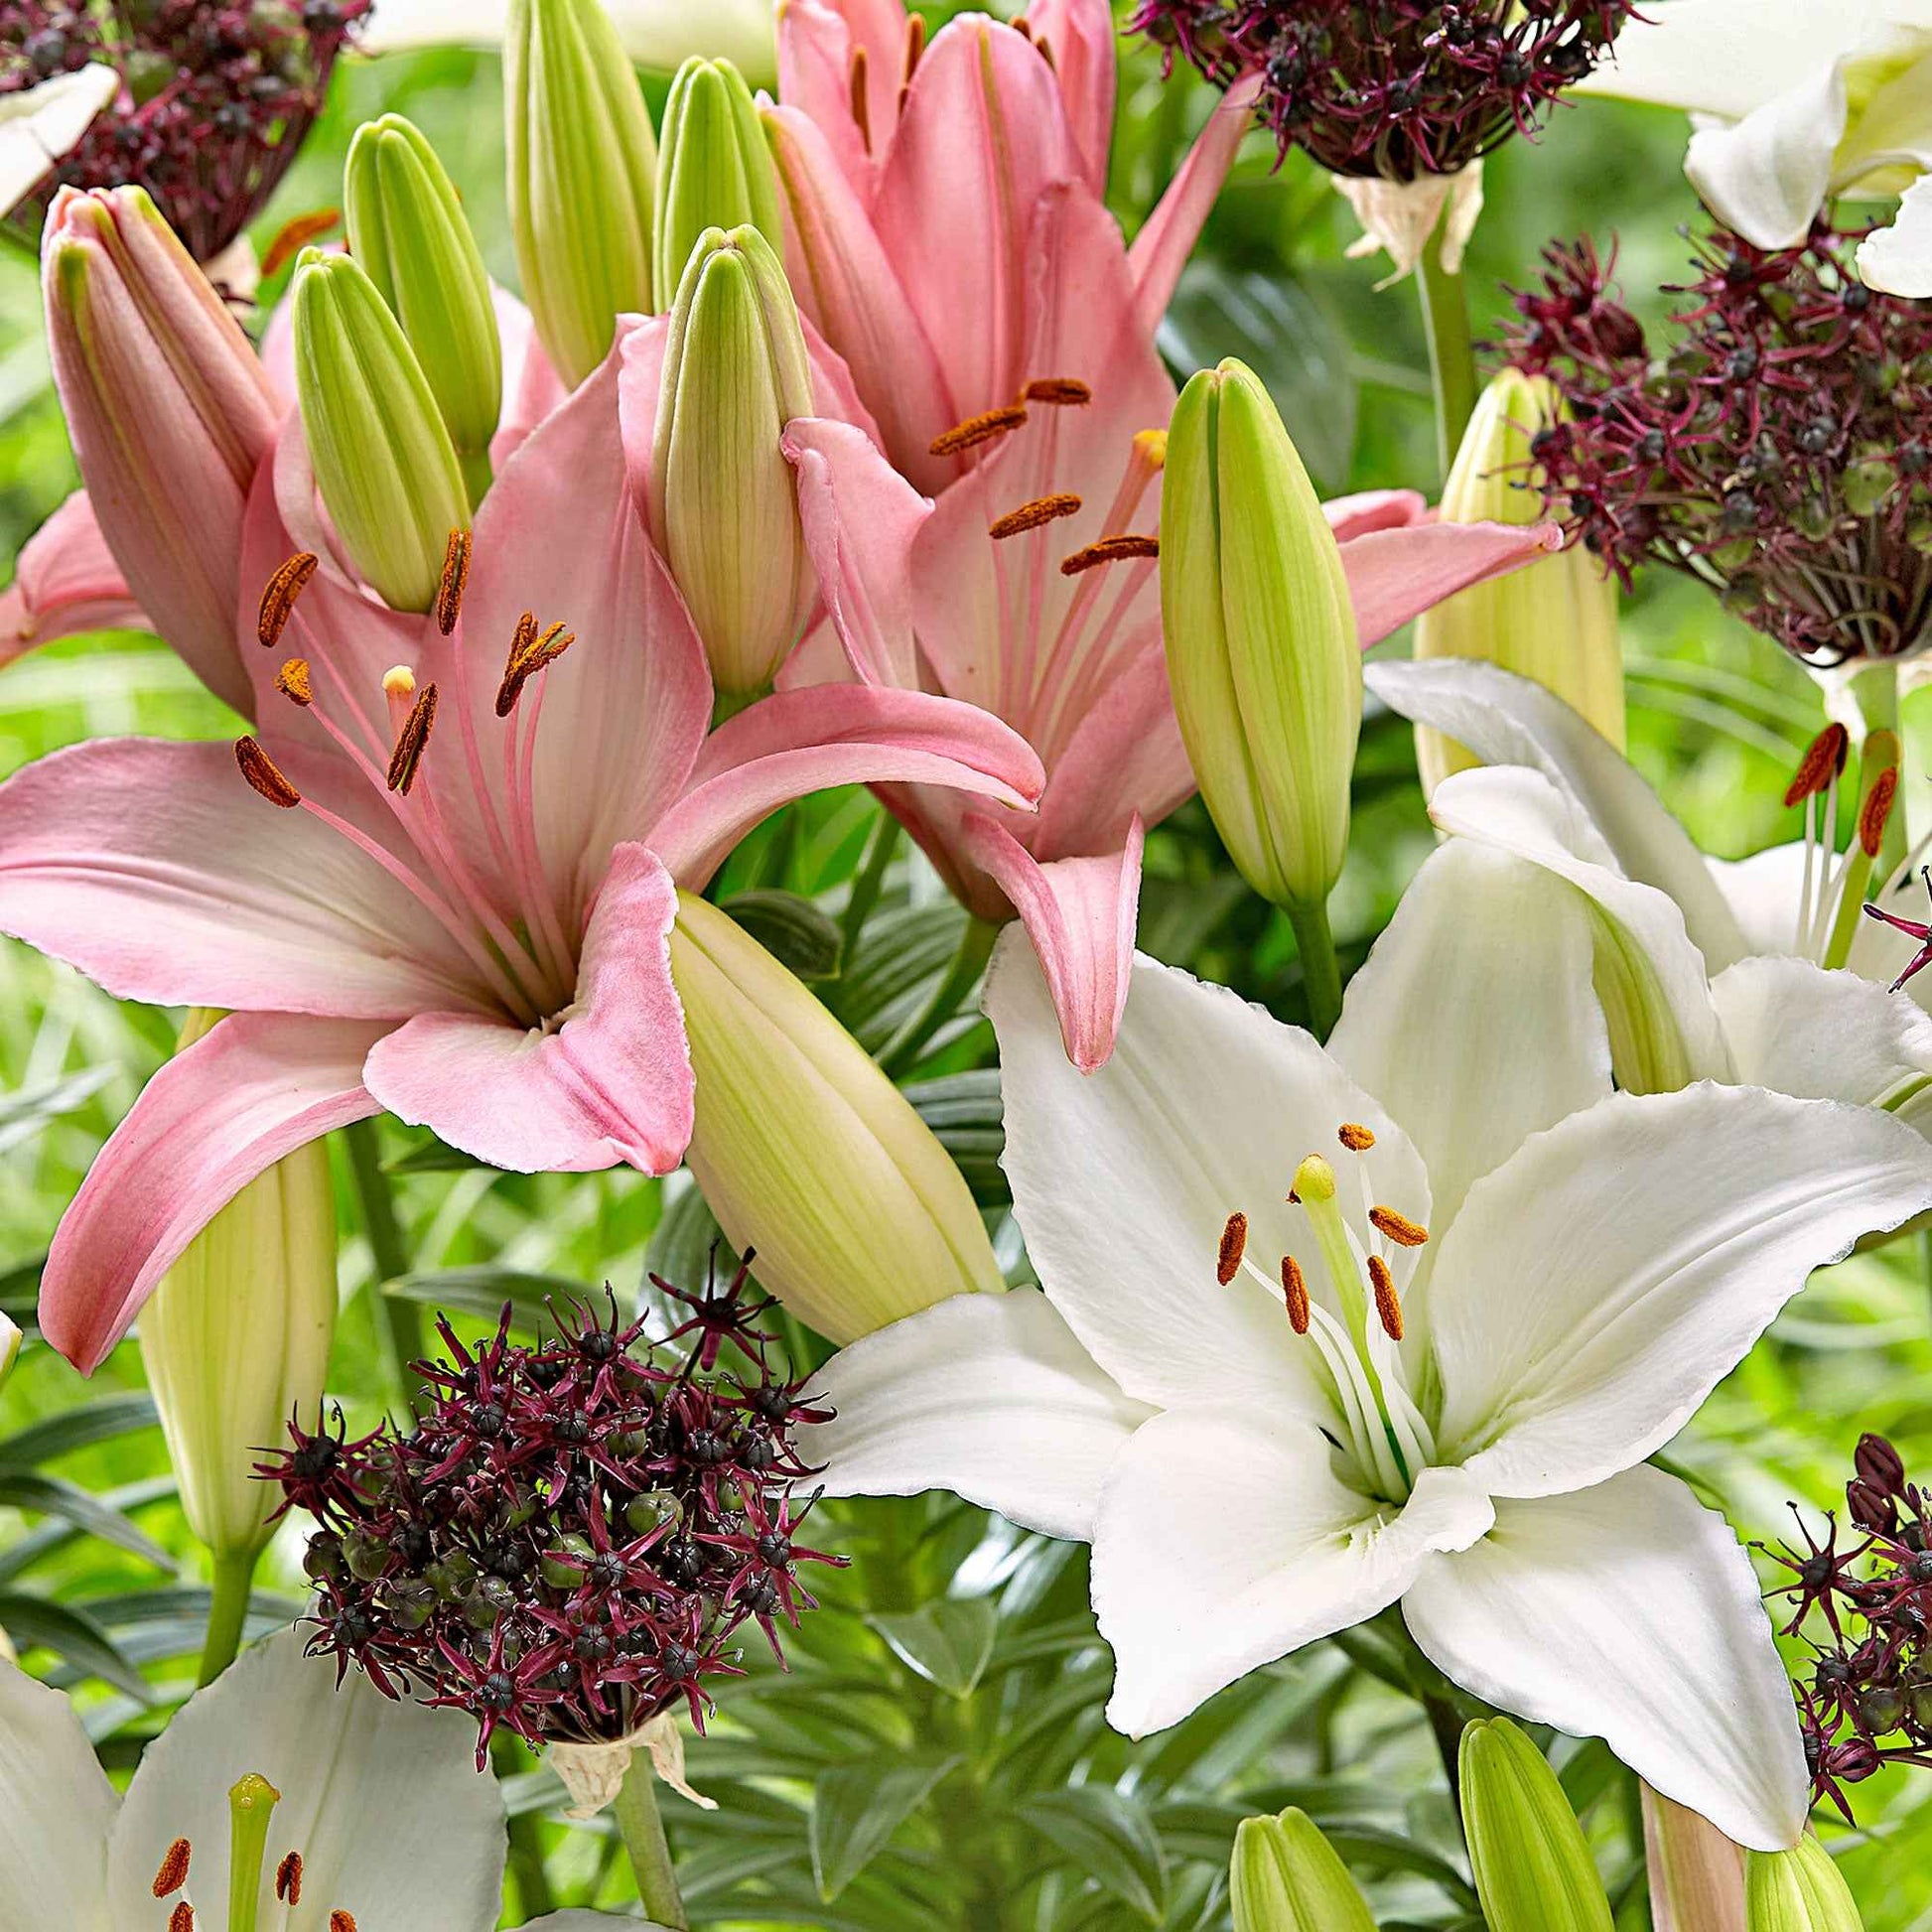 12x Lelies Lilium - Mix Hardy Harmony roze-paars-wit - Bloembollen